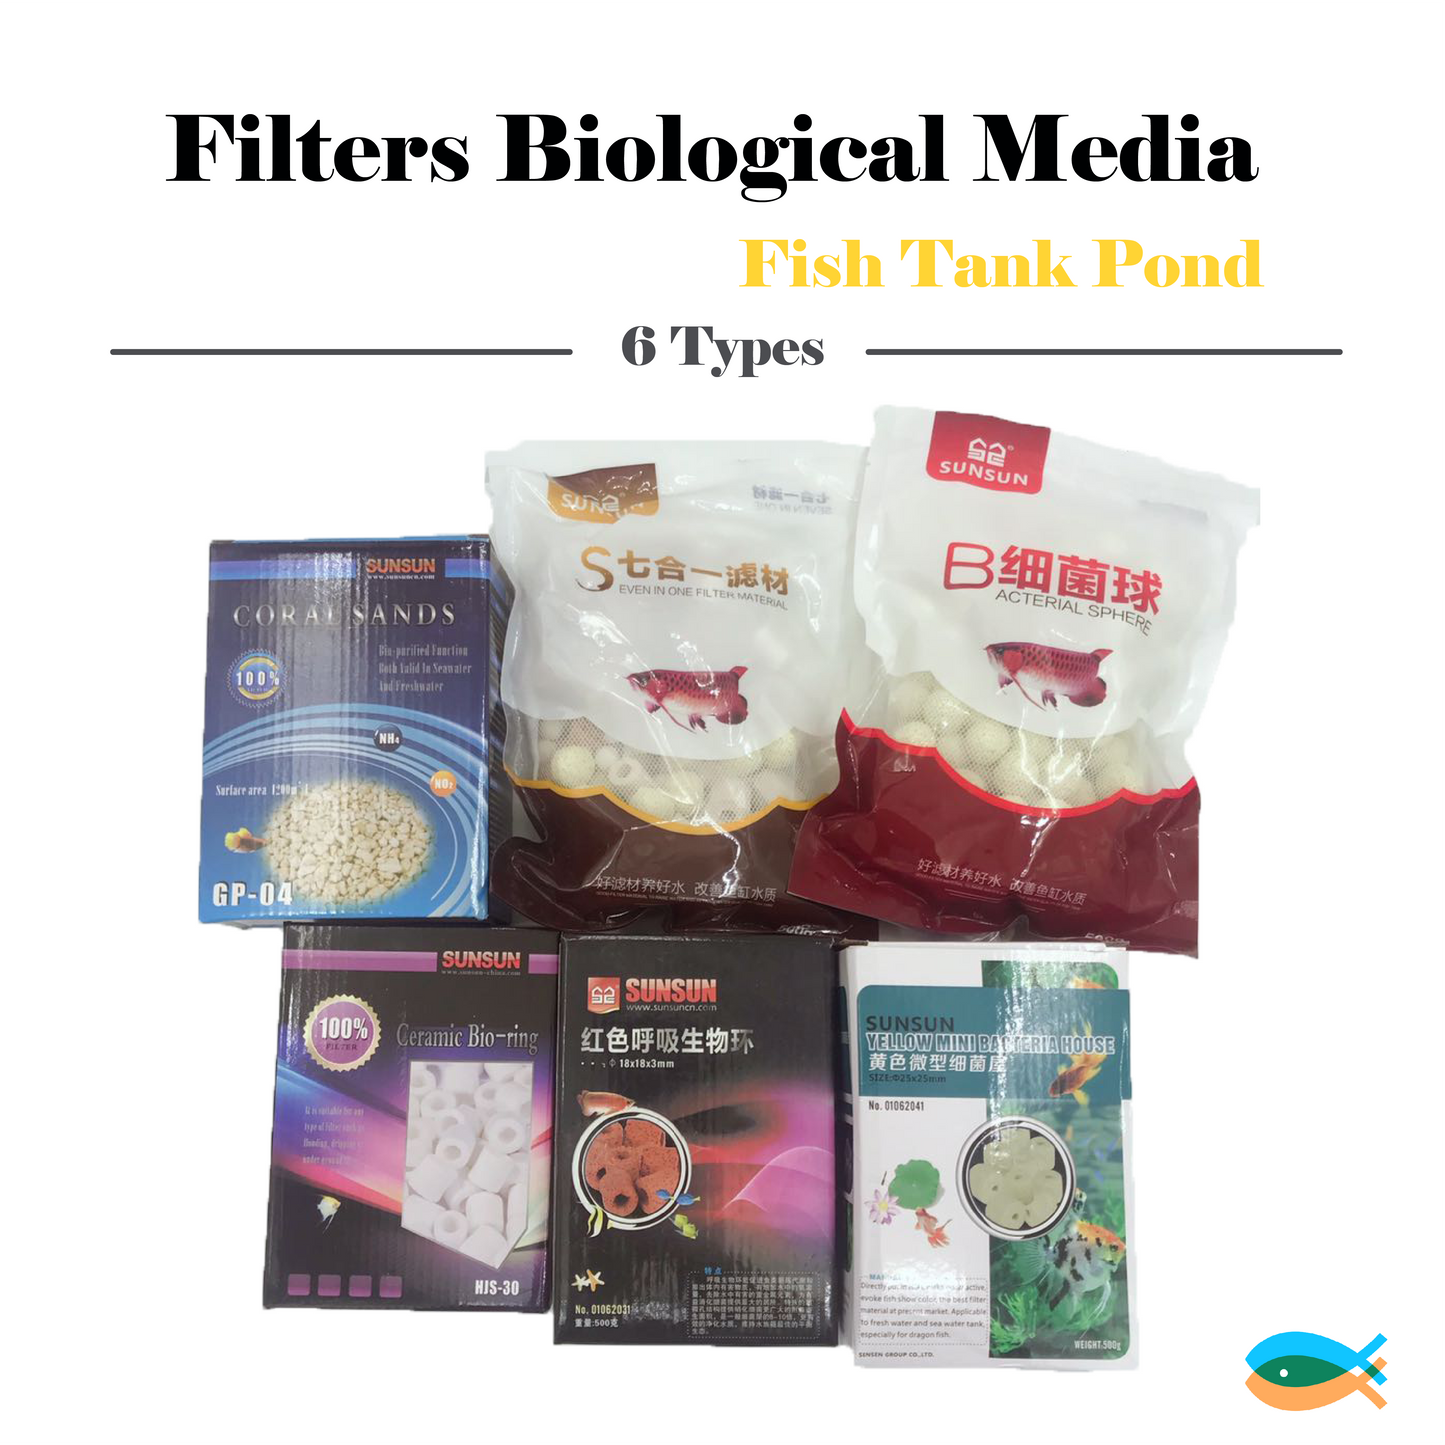 SUNSUN Brand New Filters Biological Media Fish Tank Pond